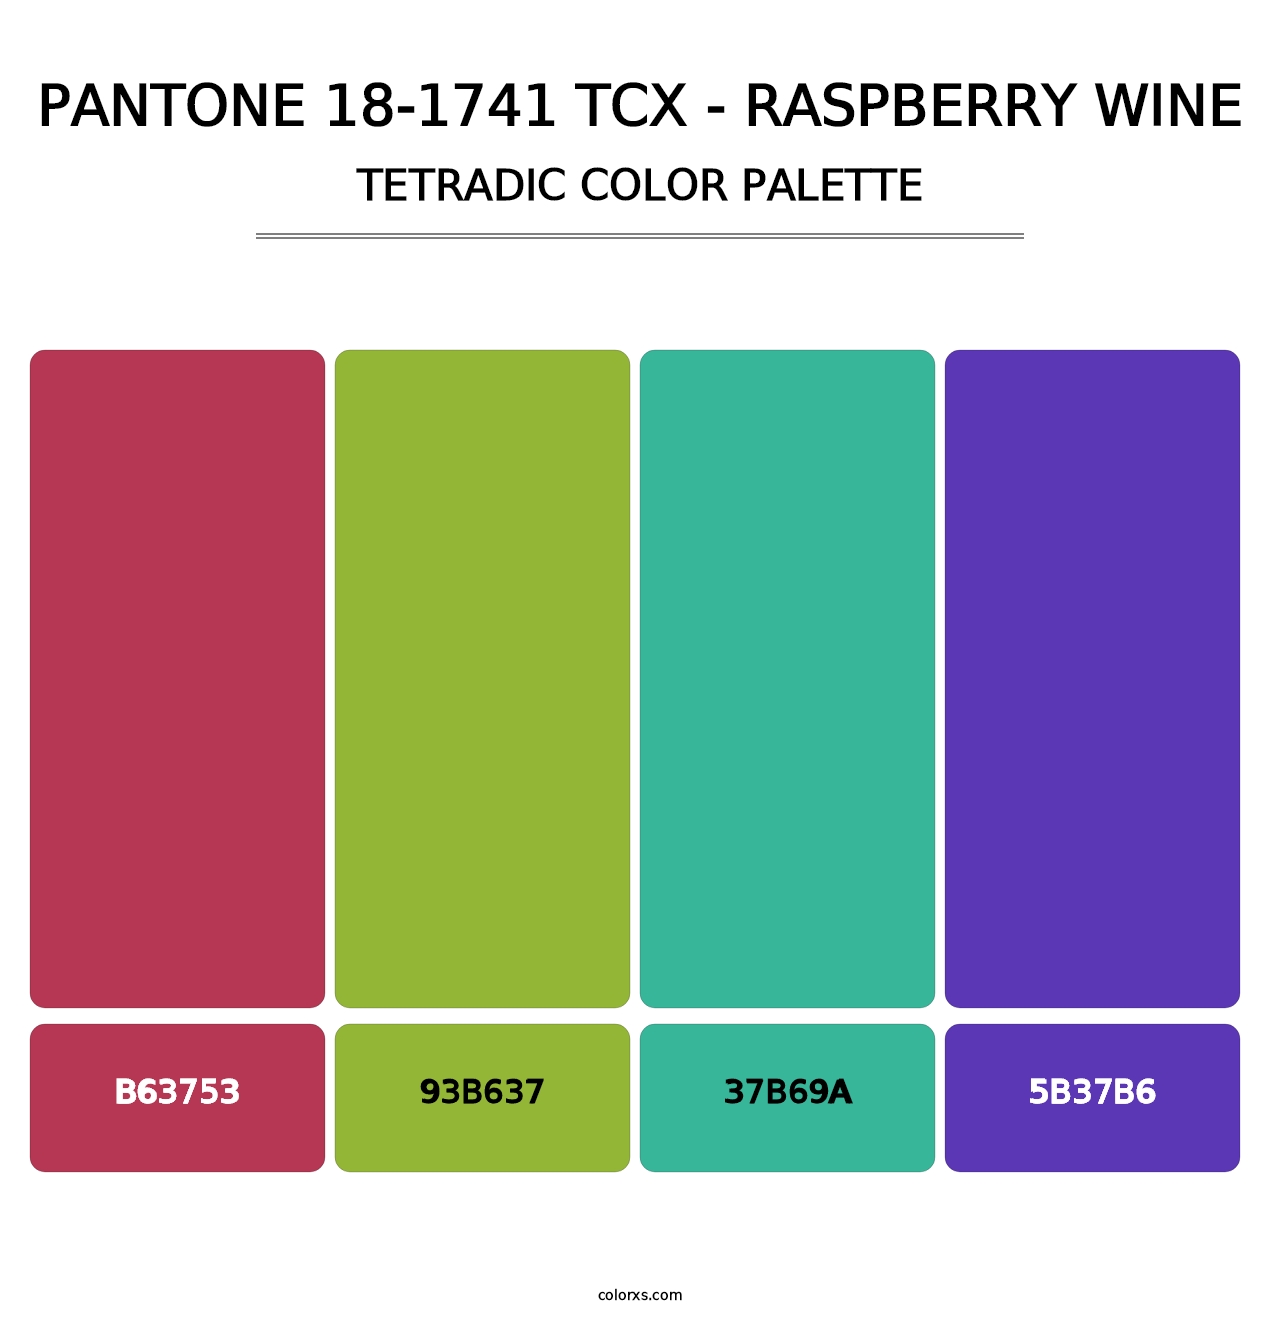 PANTONE 18-1741 TCX - Raspberry Wine - Tetradic Color Palette